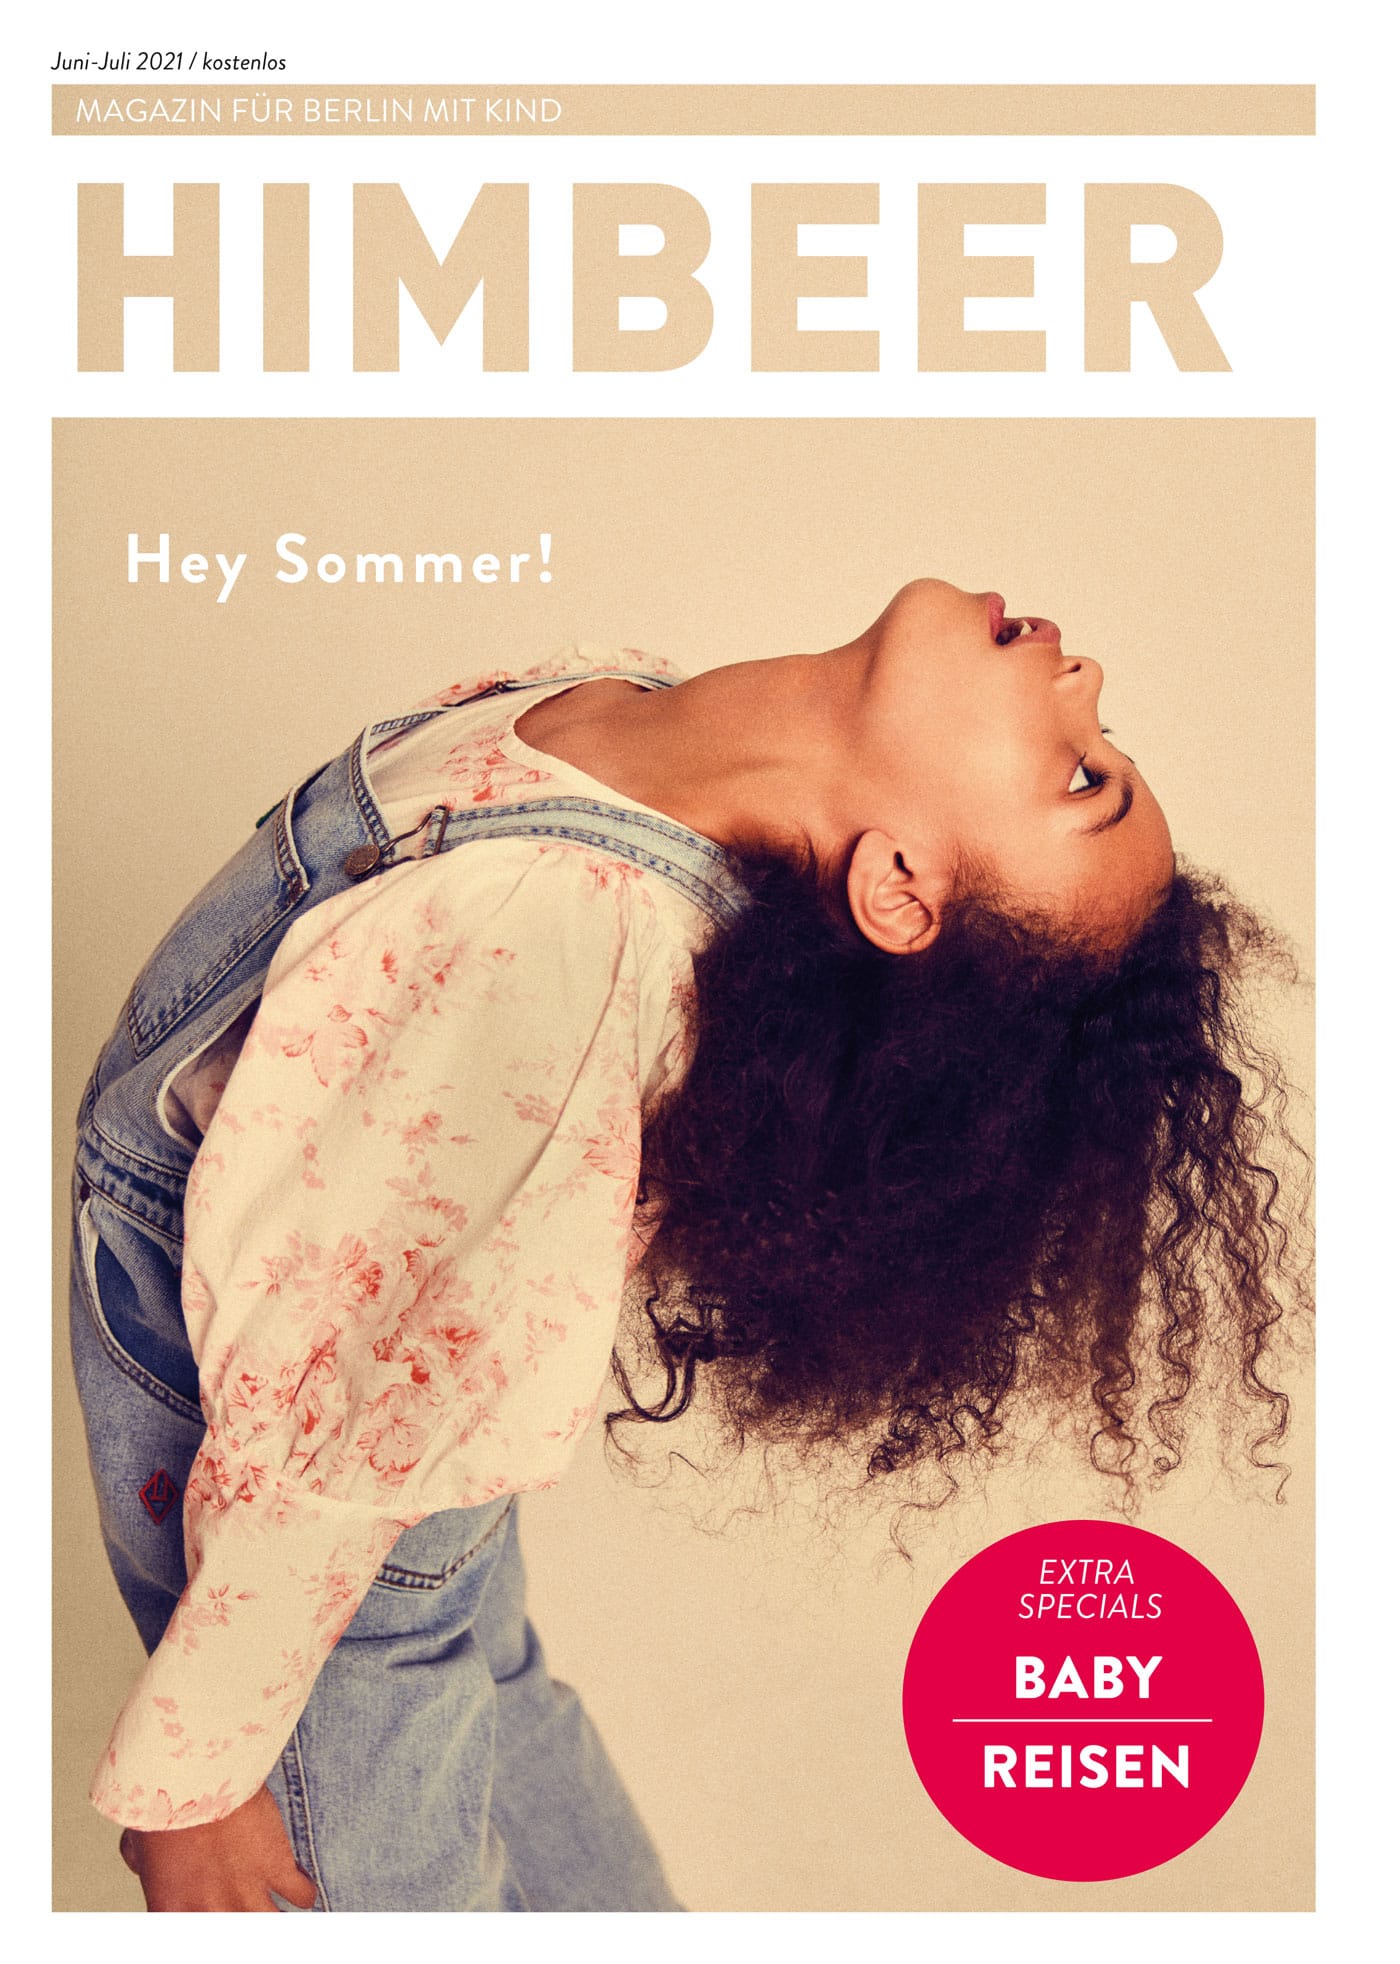 Das Berliner Familienmagazin: Himbeer Magazin Für Berlin Mkit Kindern Juni-Juli 2021-Ausgabe // Himbeer